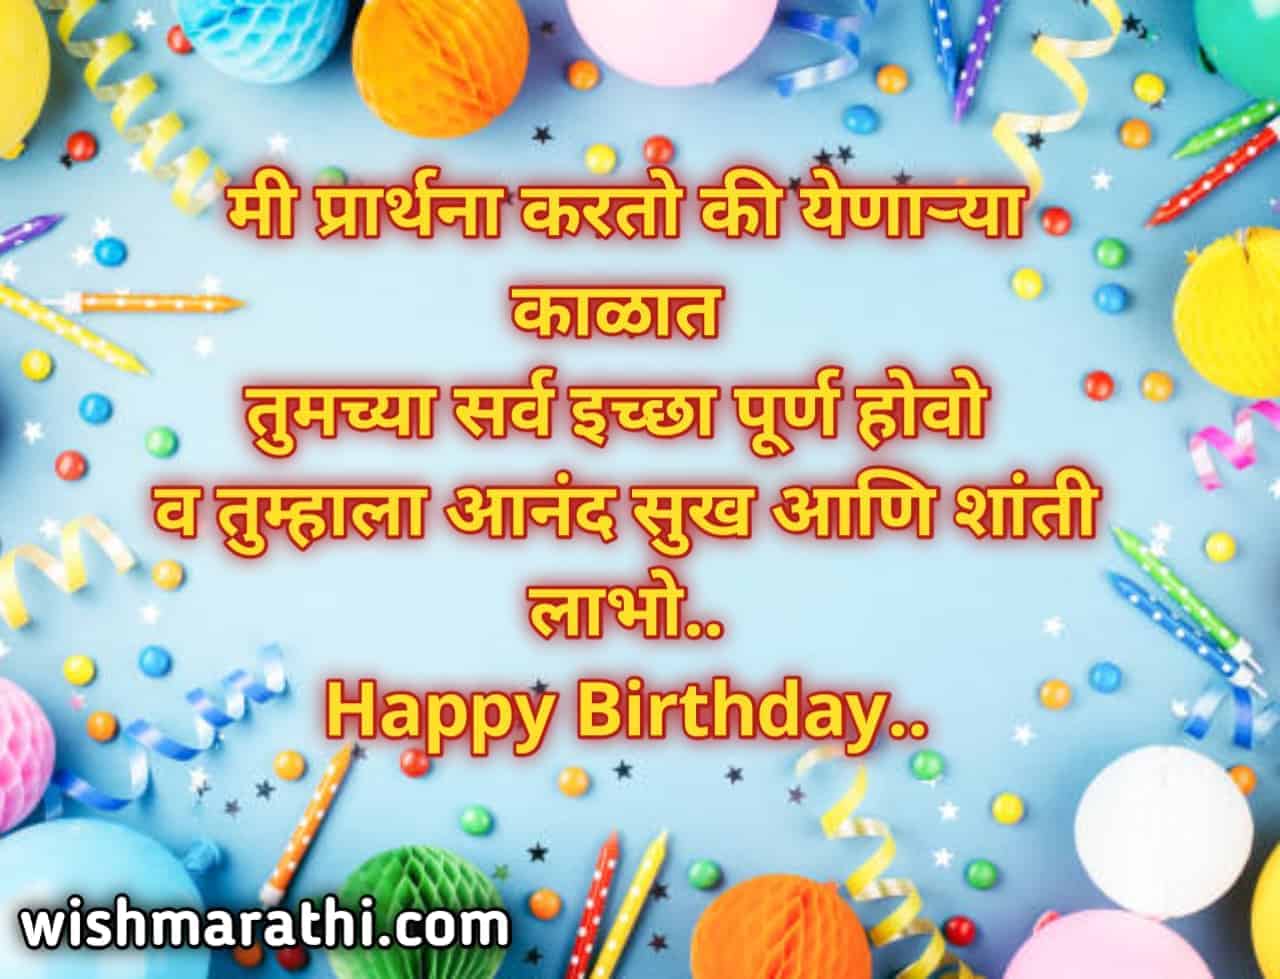 75th birthday wishes in marathi